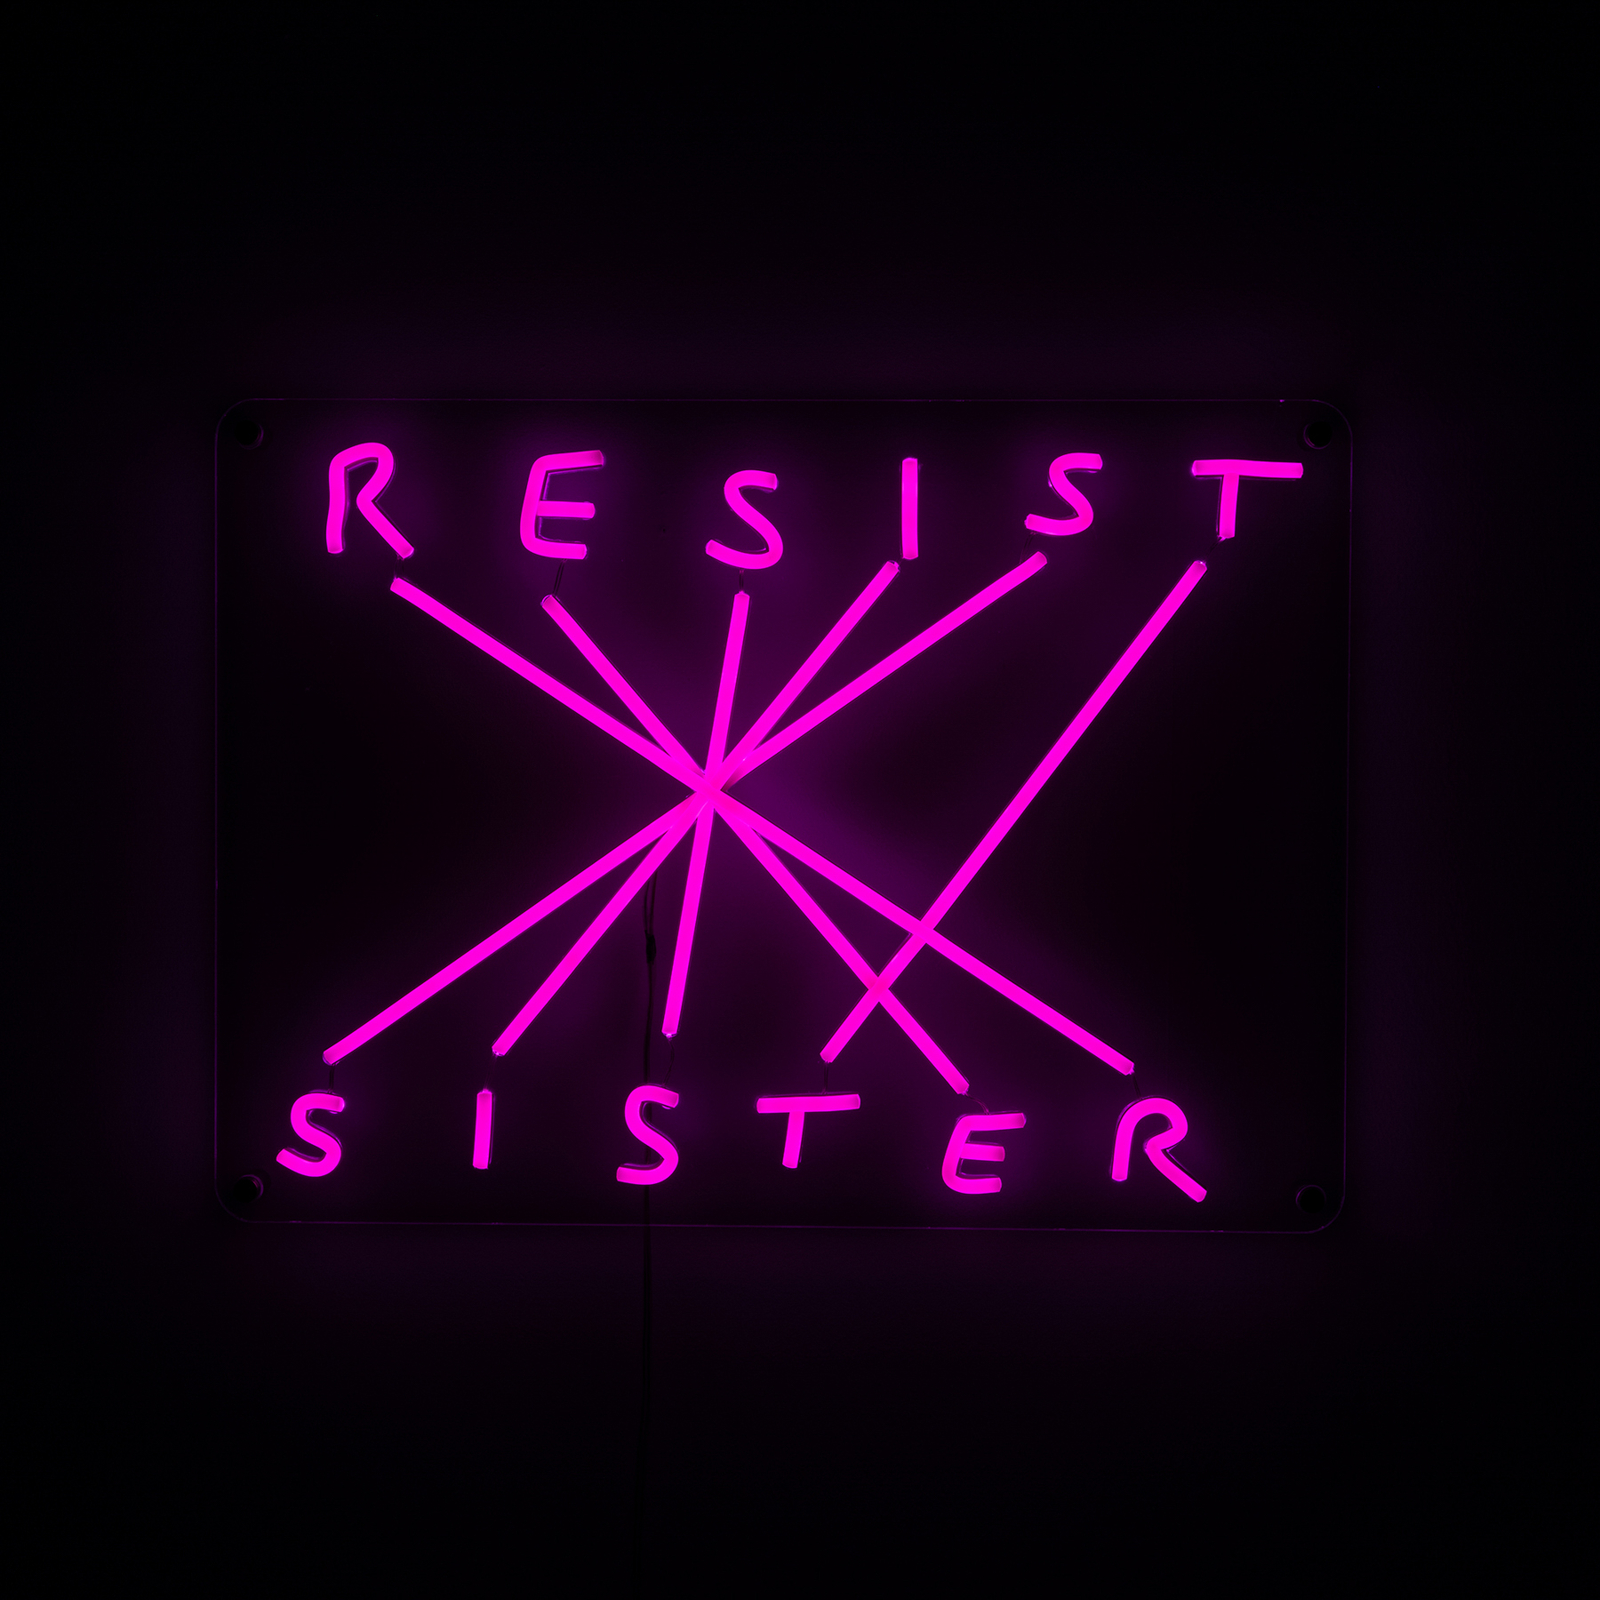 LED dekorvägglampa Resist-Sister, fuchsia